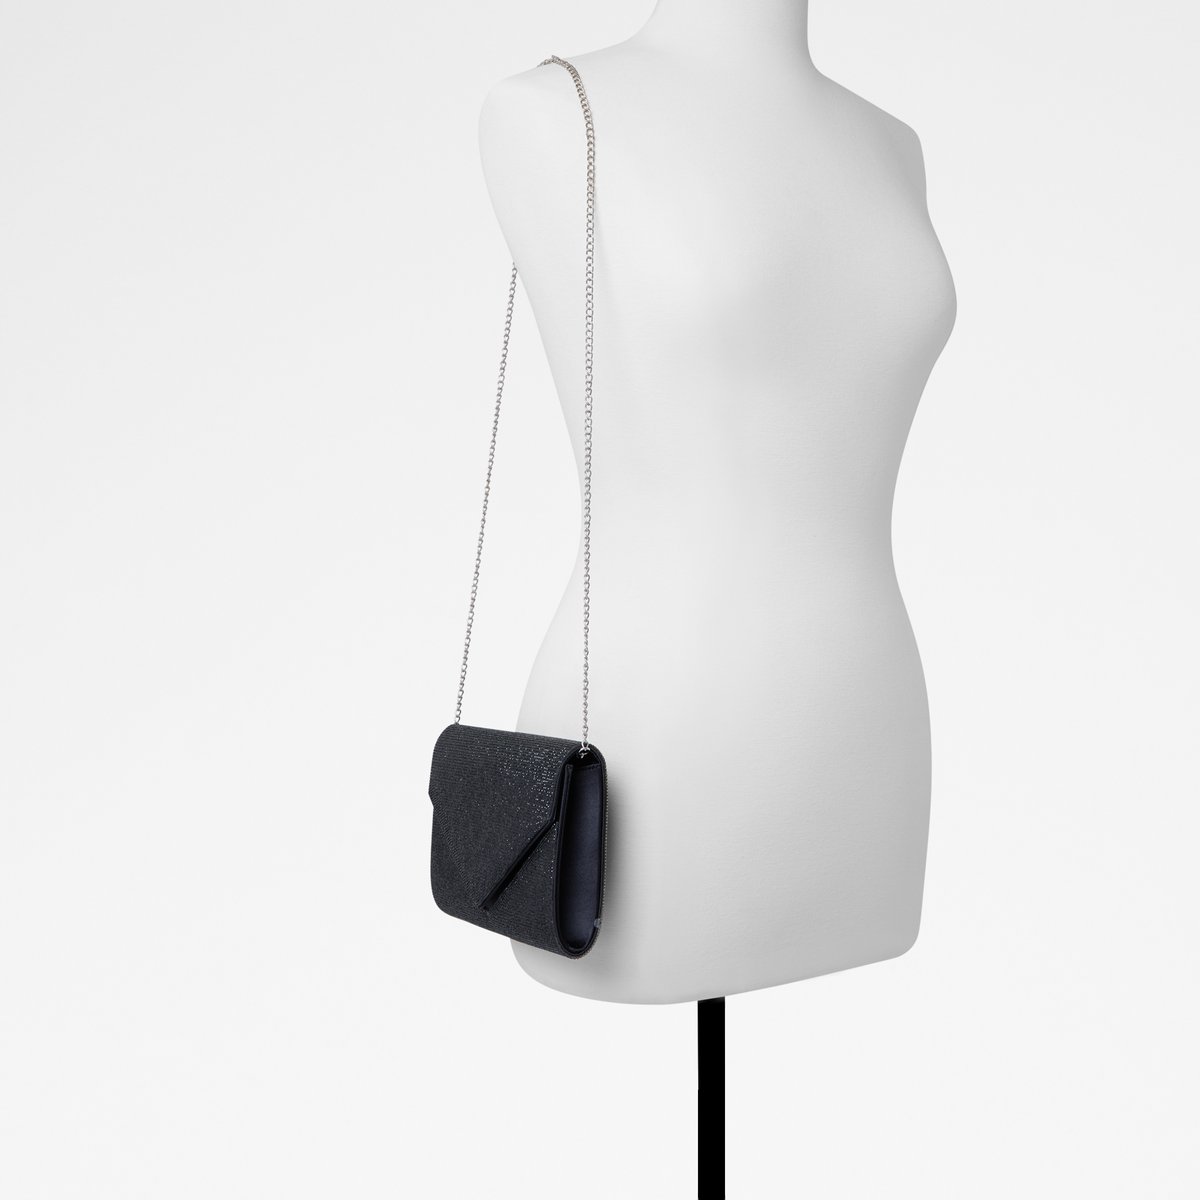 Aldo Acarema Black W/ Rhinestone Evening Clutch Bag chain strap Shoulder New